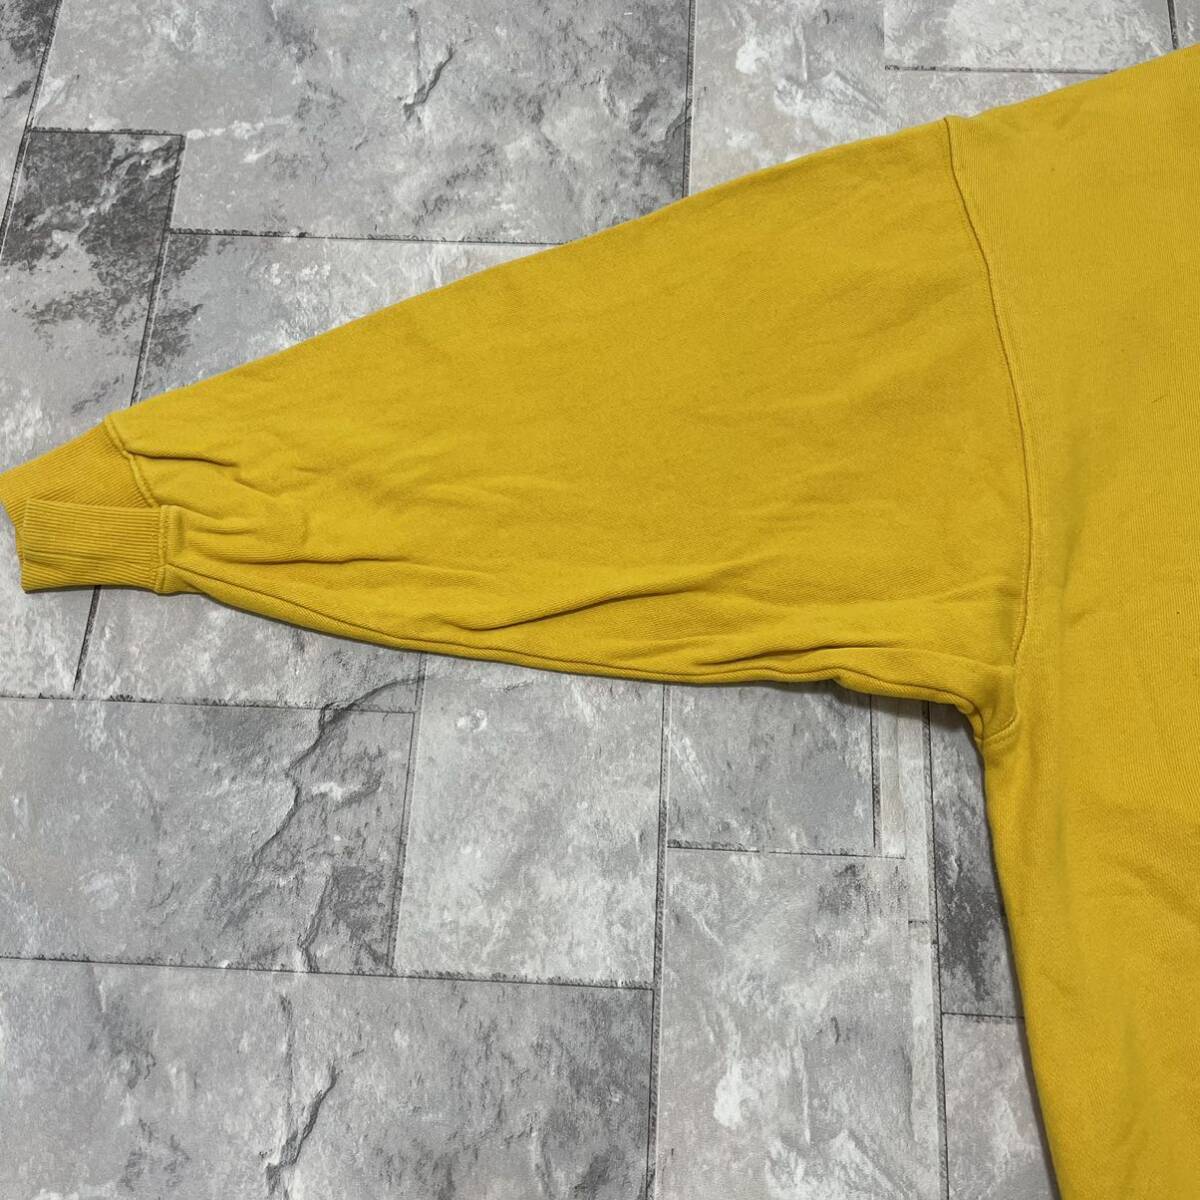 Xgirl X-girl sweat тренировочный футболка вышивка Logo большой Silhouette ..dabo женский желтый размер F шар FL3455